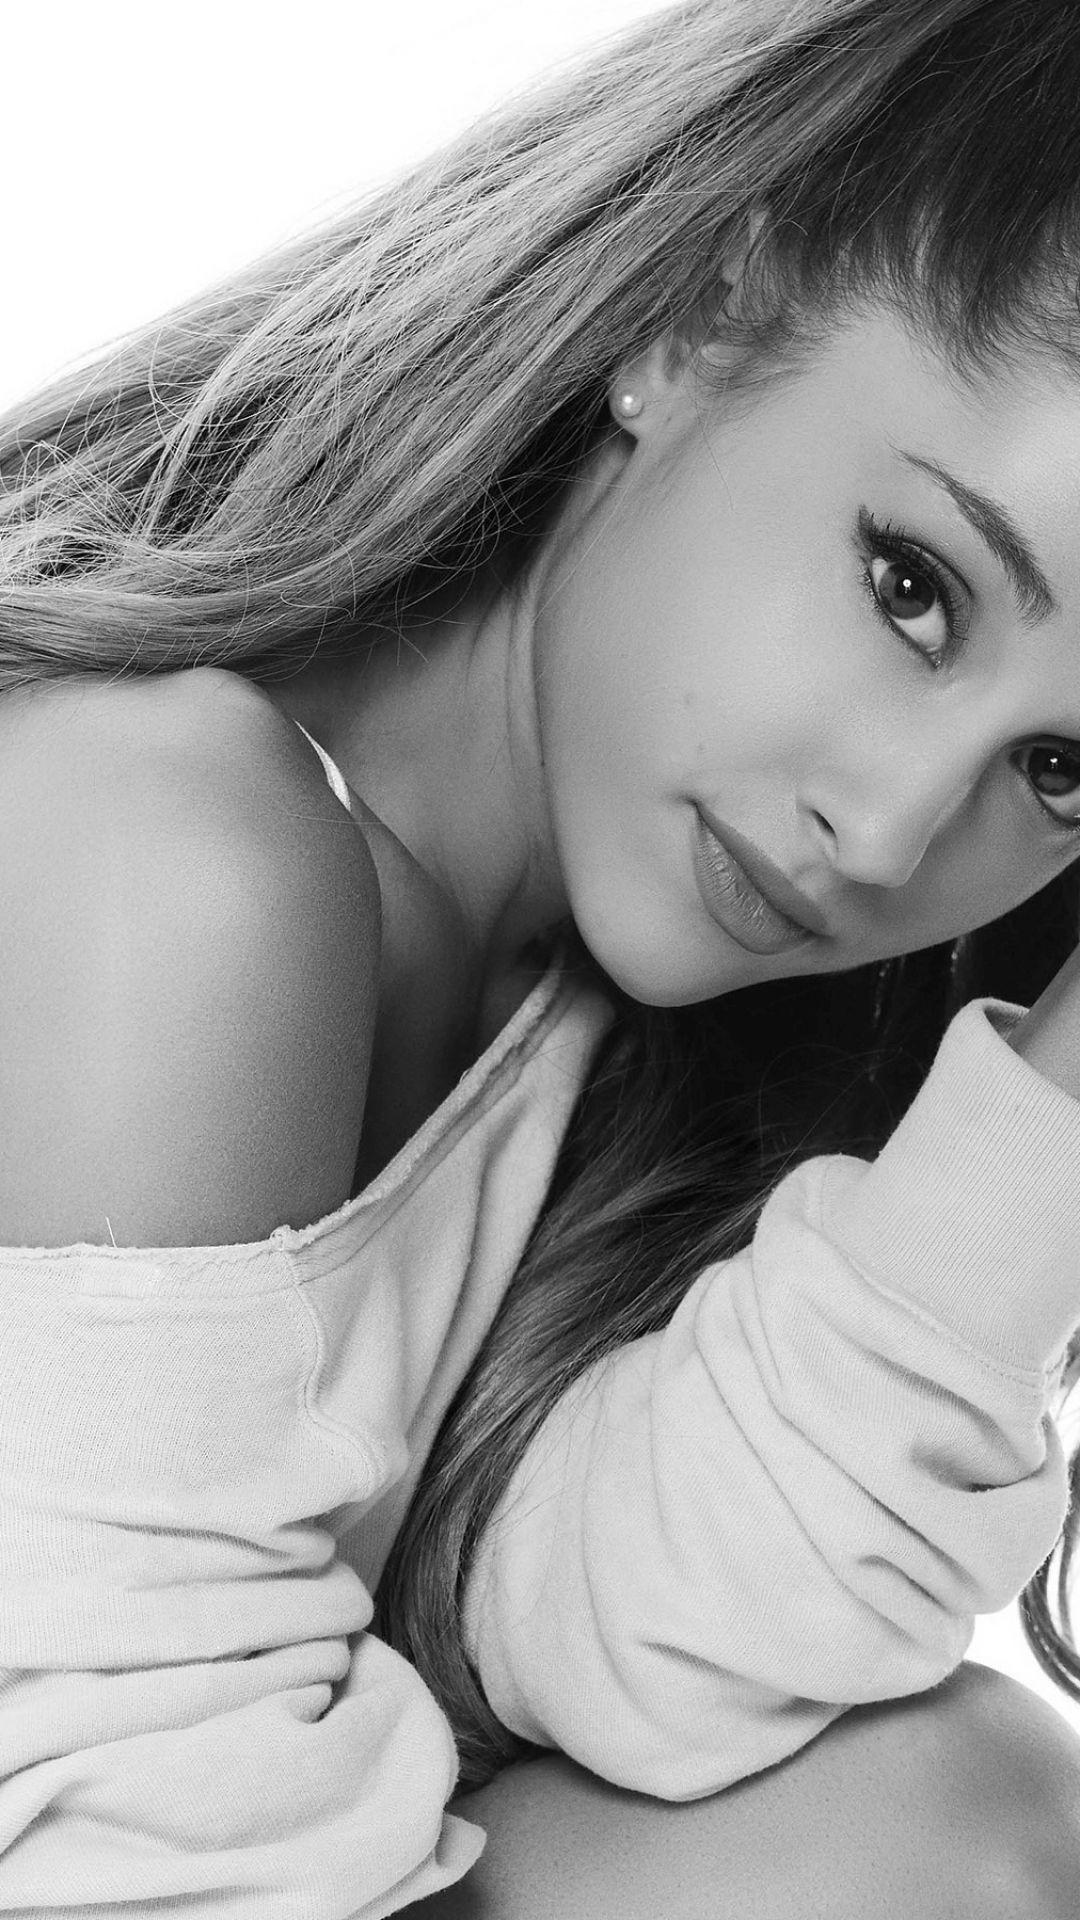 Ariana Grande iPhone Wallpapers - Top Free Ariana Grande ...